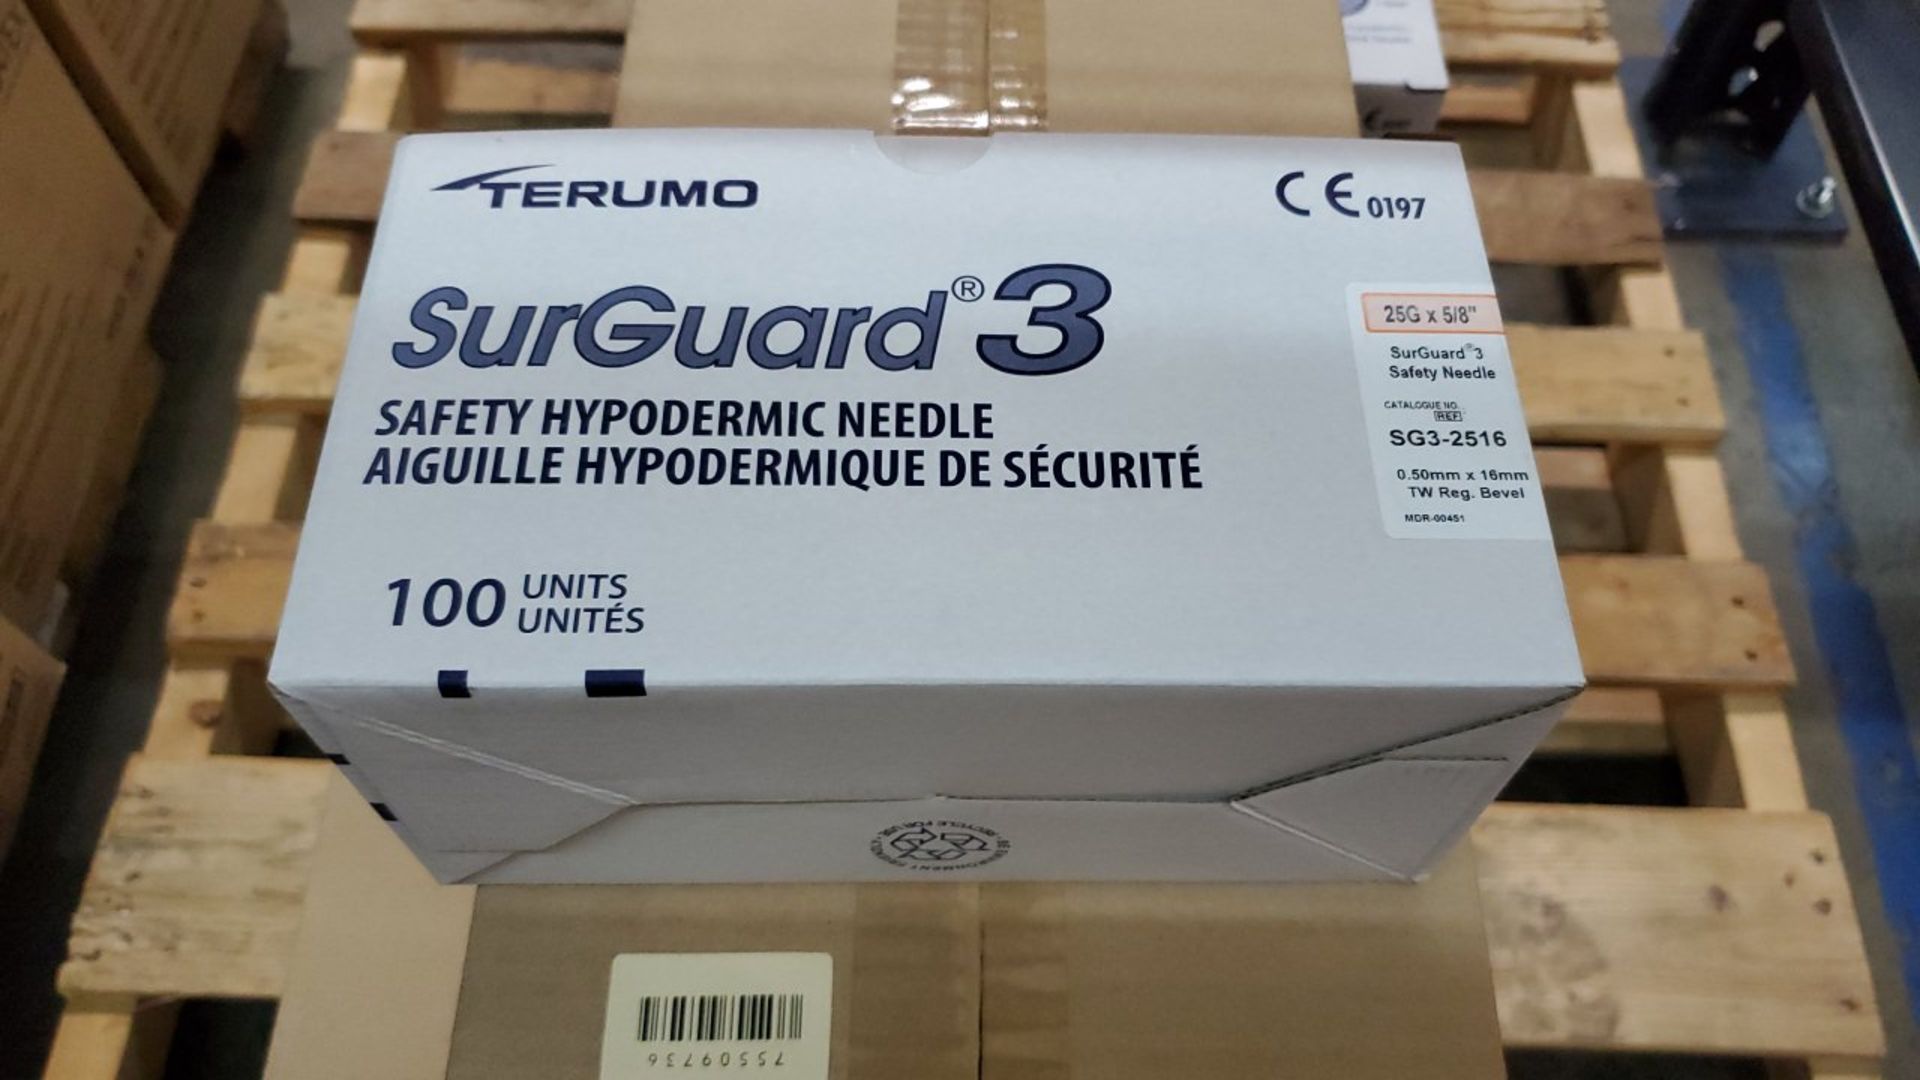 Terumo Safety Hypodermic Needles - Image 2 of 5